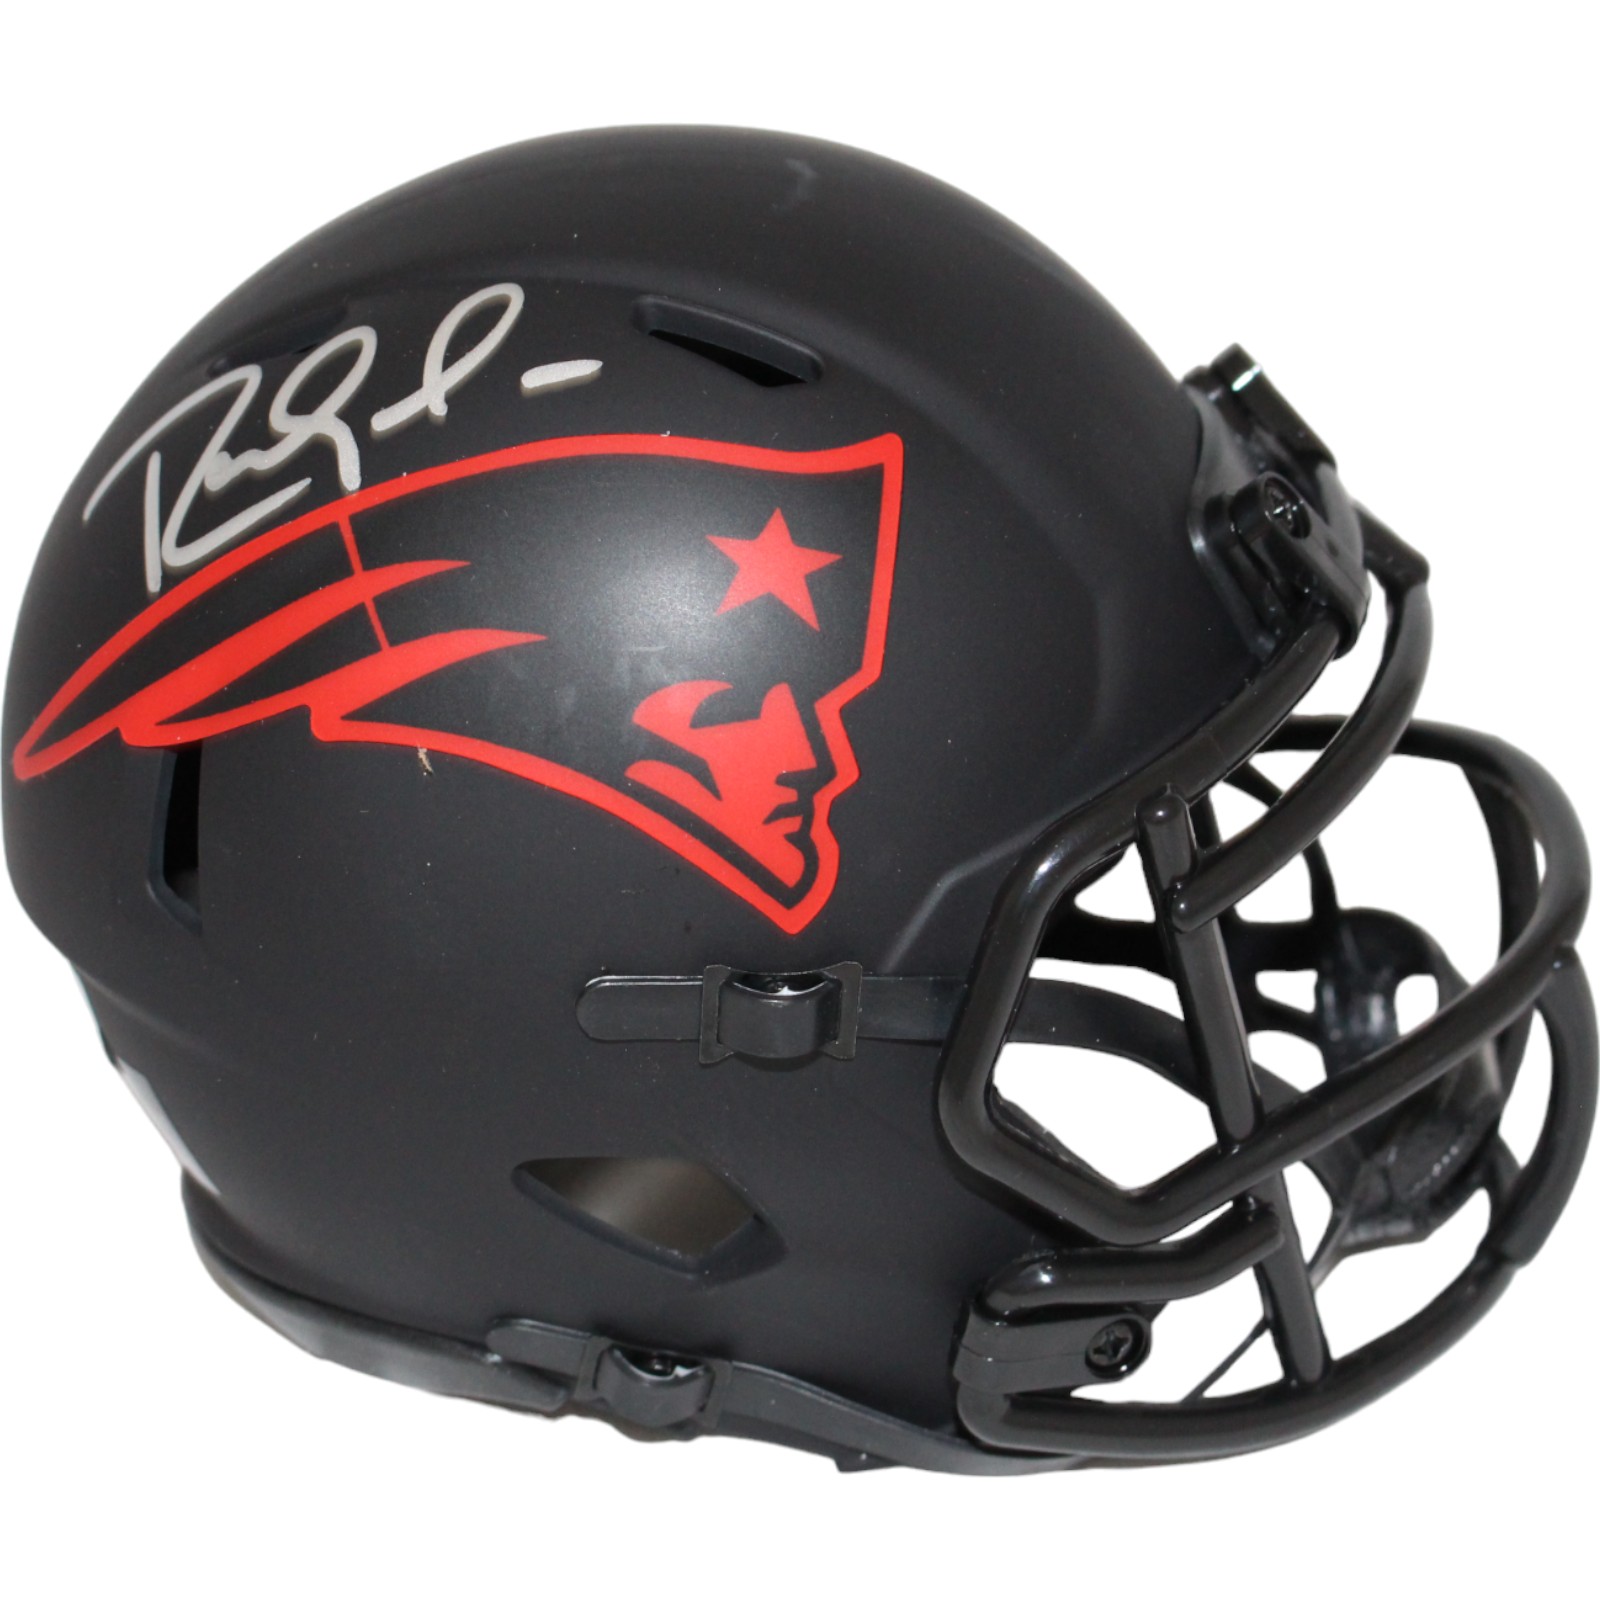 Randy Moss Signed New England Patriots Mini Helmet Eclipse Beckett